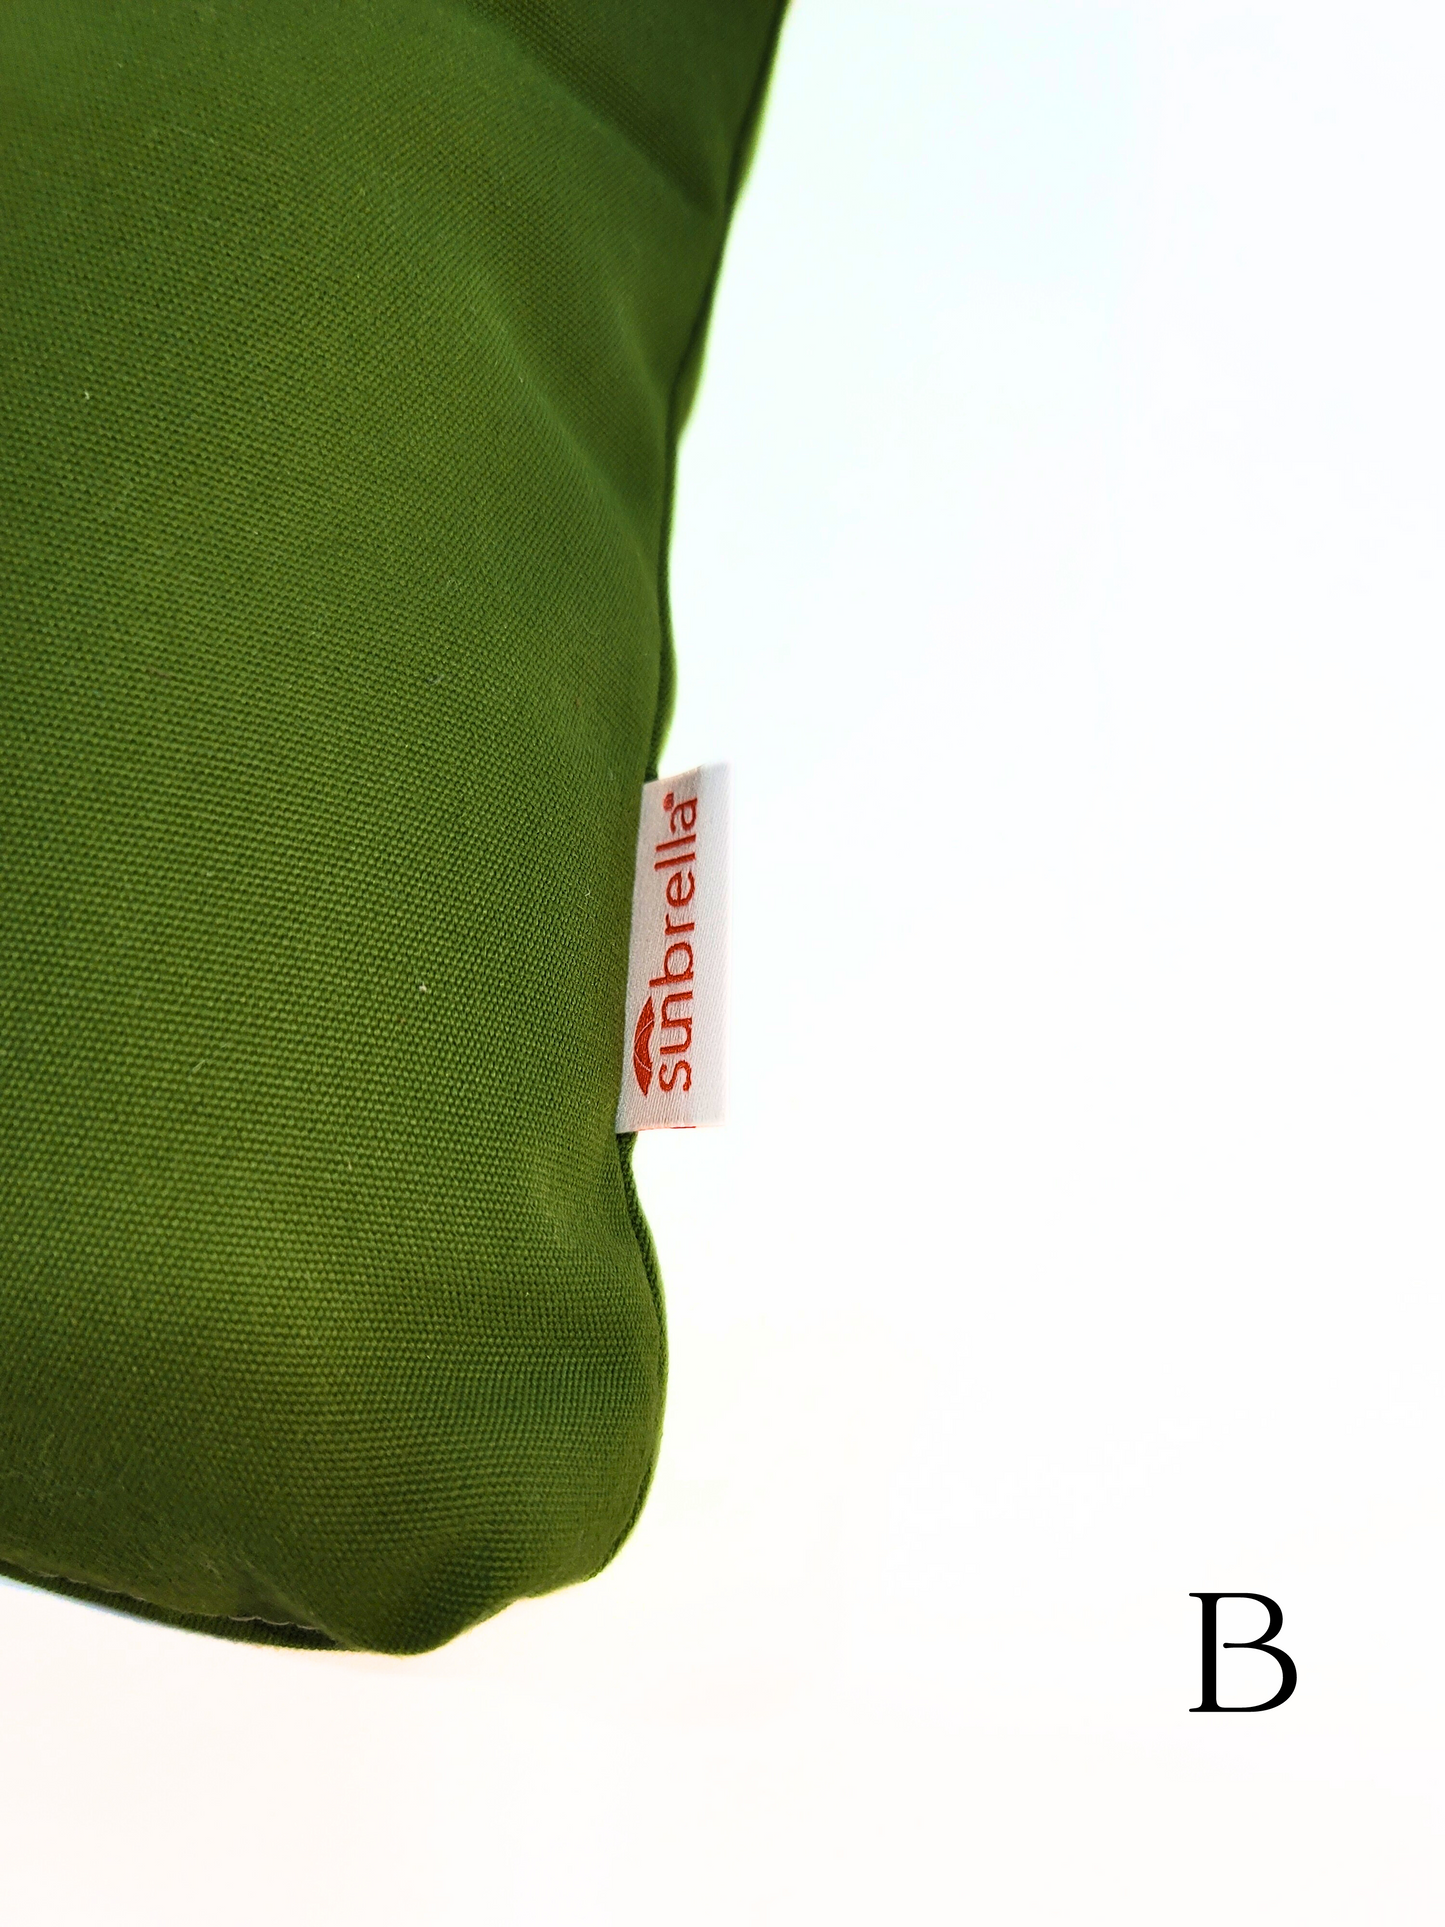 Sunbrella 'Canvas Palm' Indoor/Outdoor Toss Pillow Cover